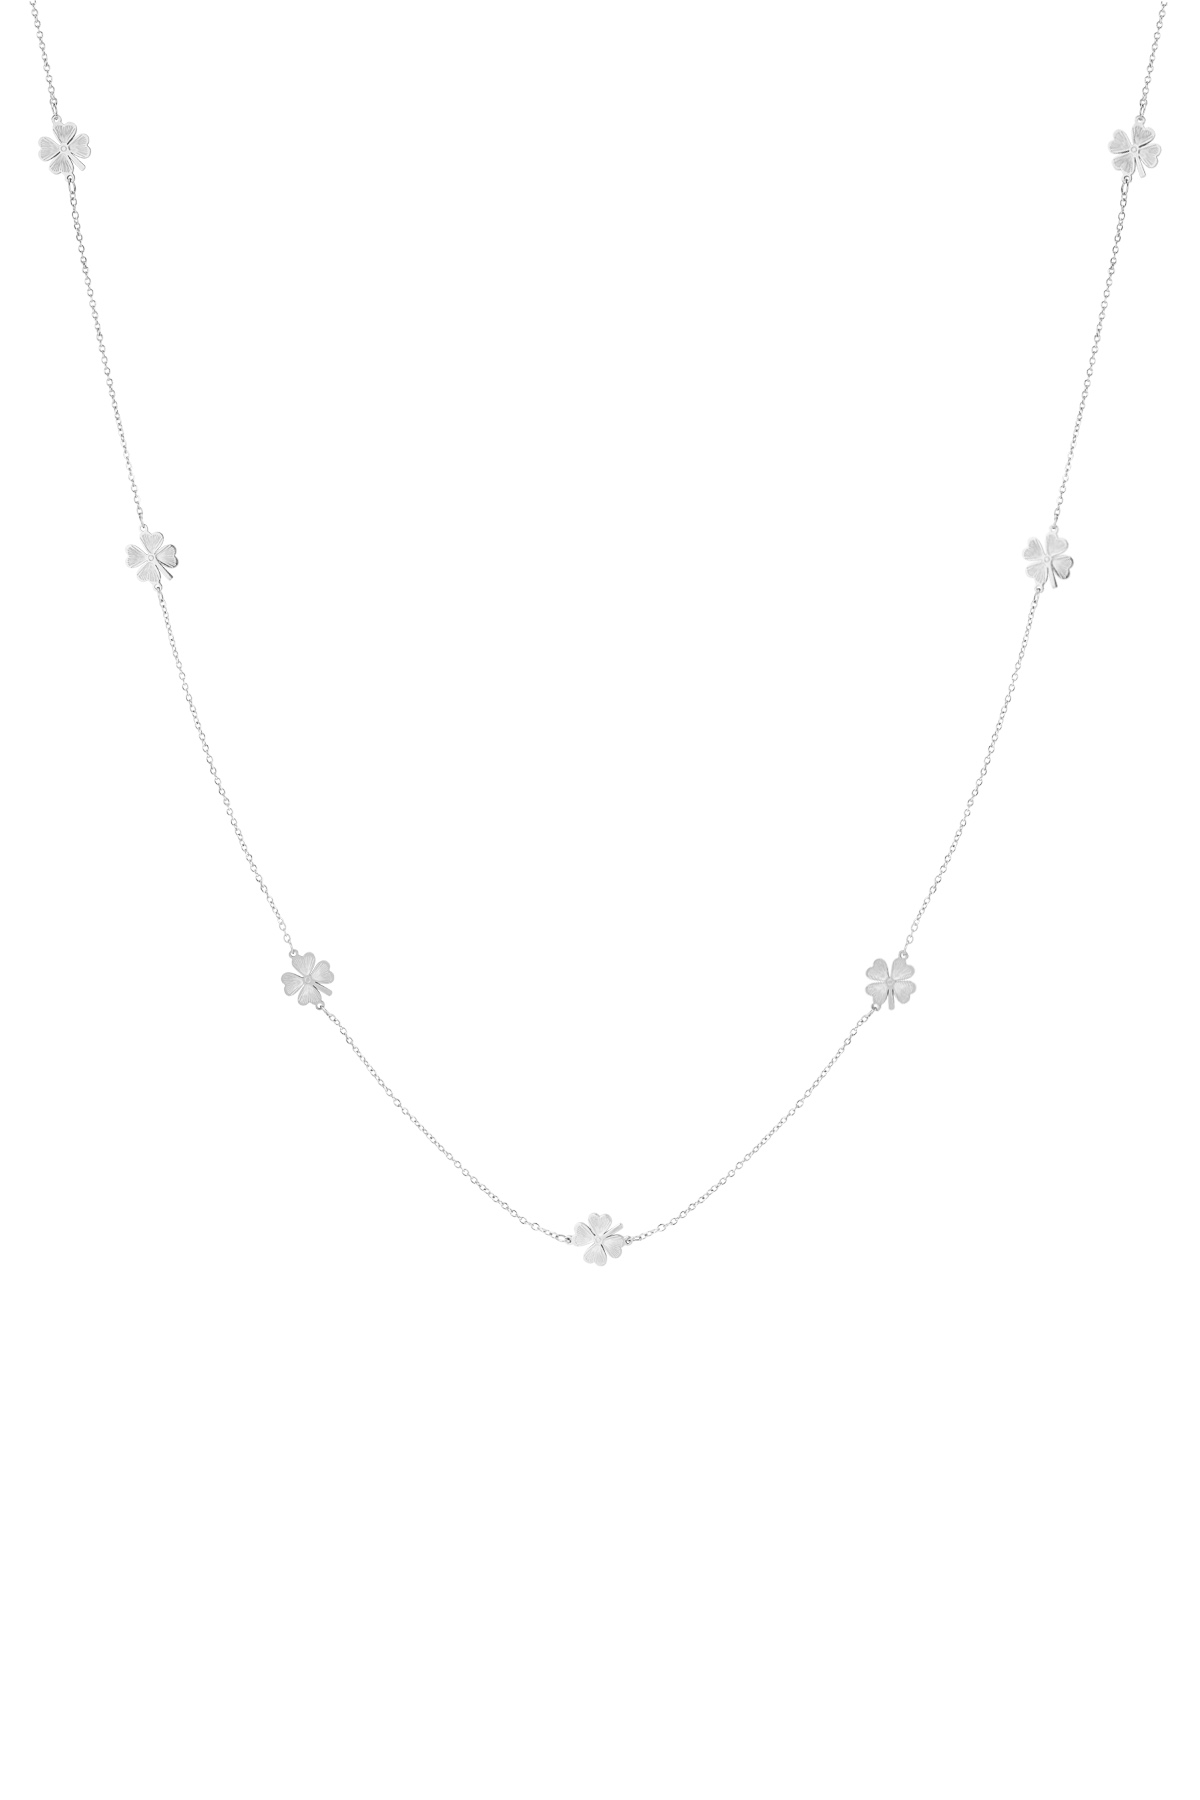 Lange Kleeblatt-Halskette – Silber h5 